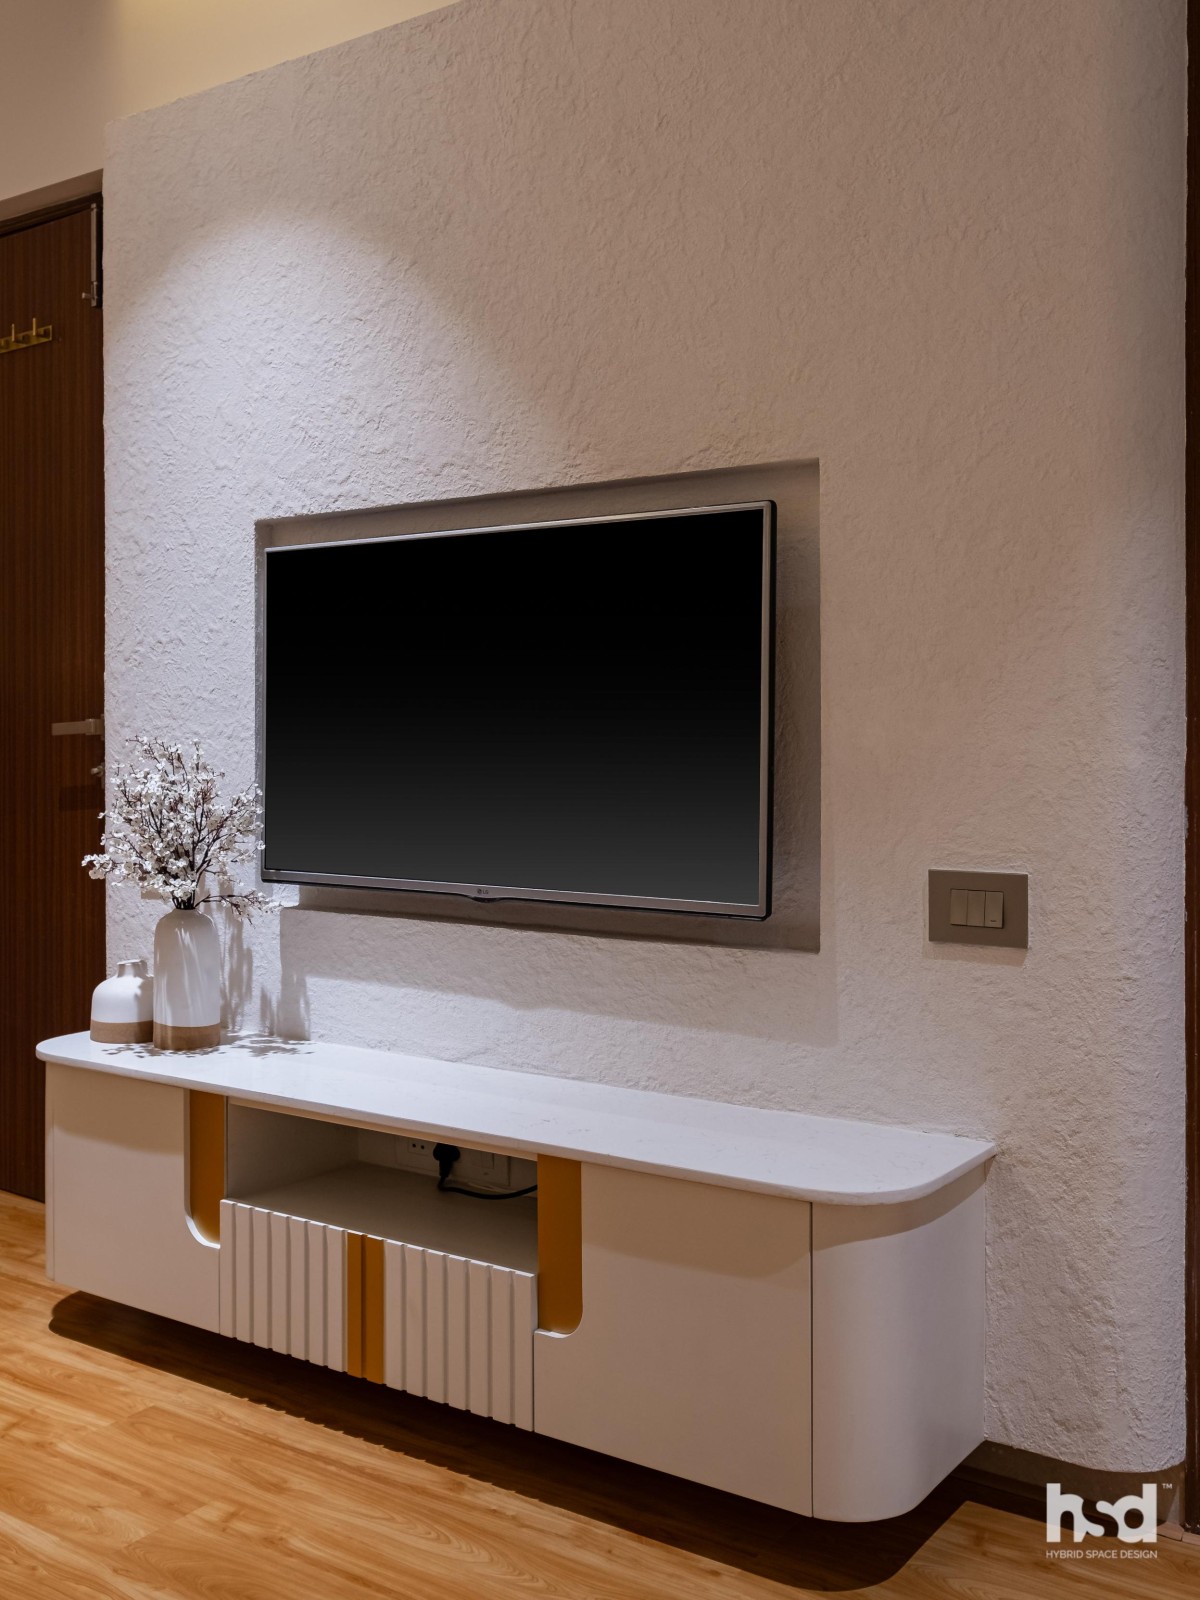 TV unit of Master Bedroom of Master Bedroom of Apartment 1303 by Hybrid Space Design